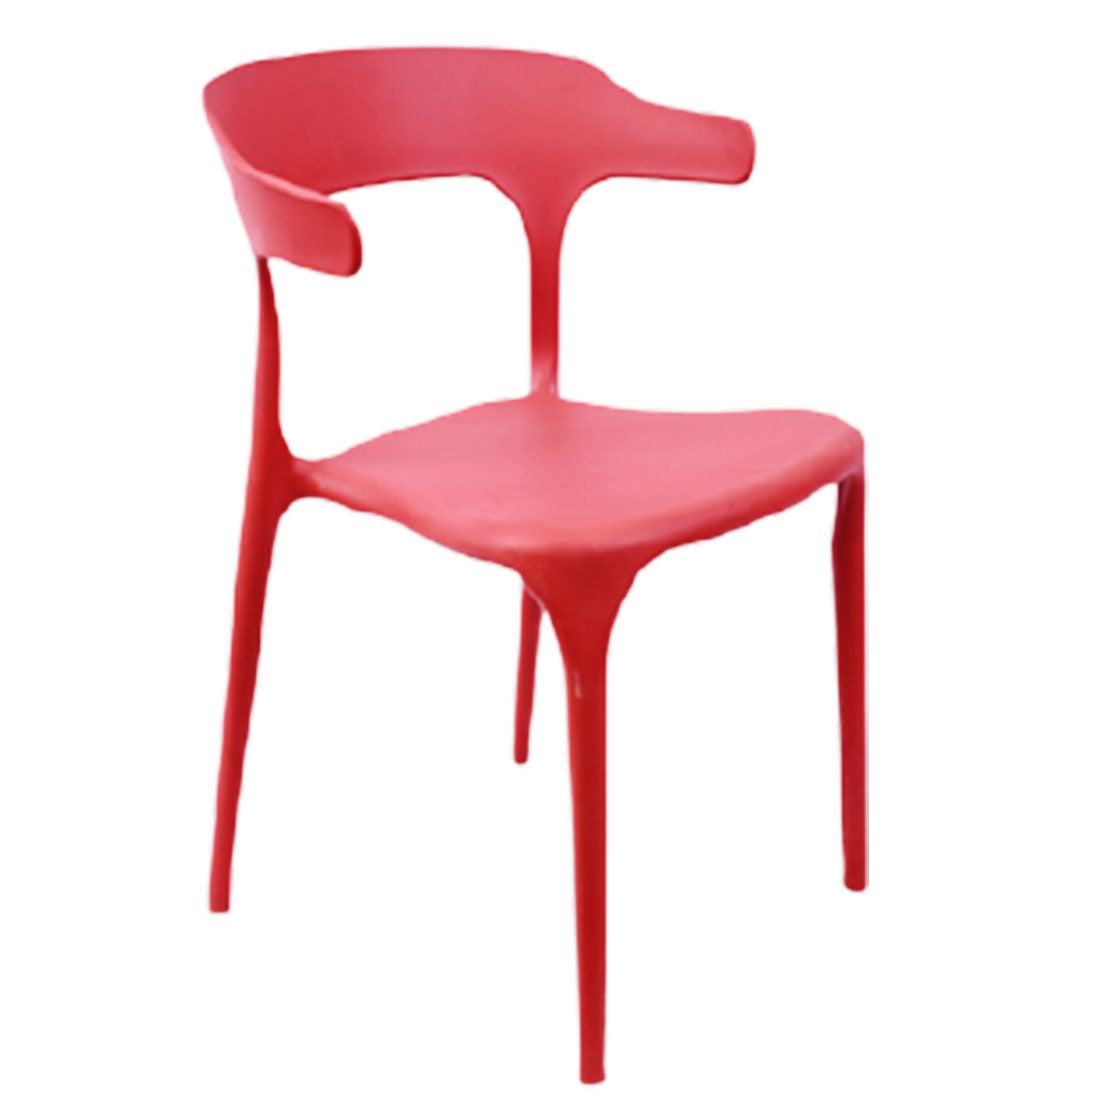  Fiber Cafe Restaurant Chair (Red)